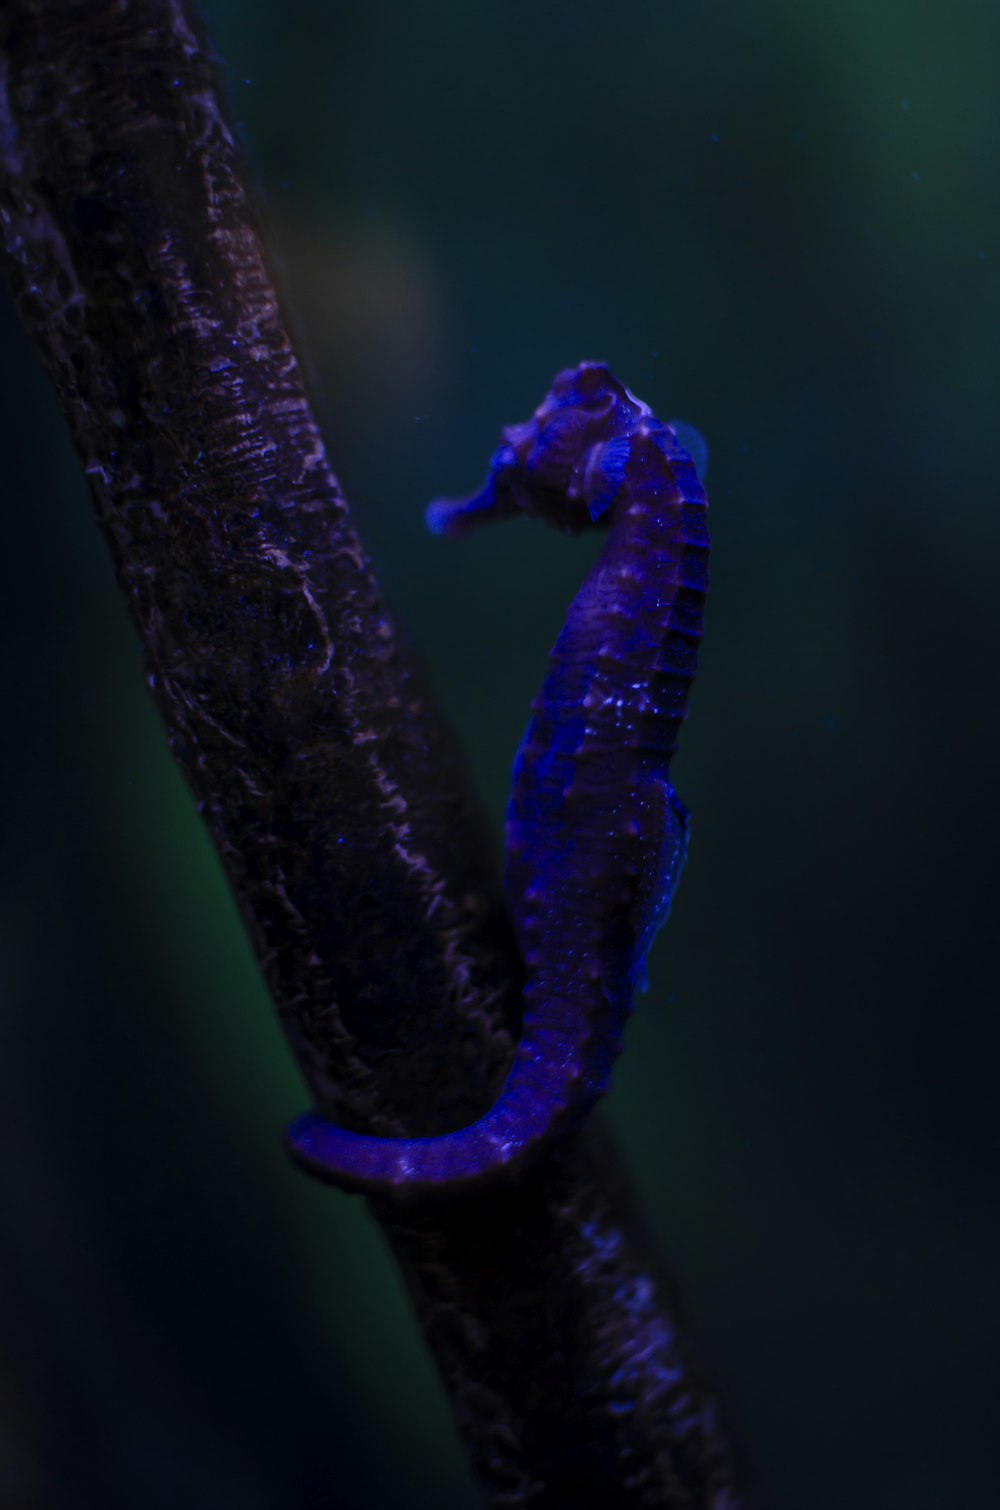 purple and green caterpillar on green stem